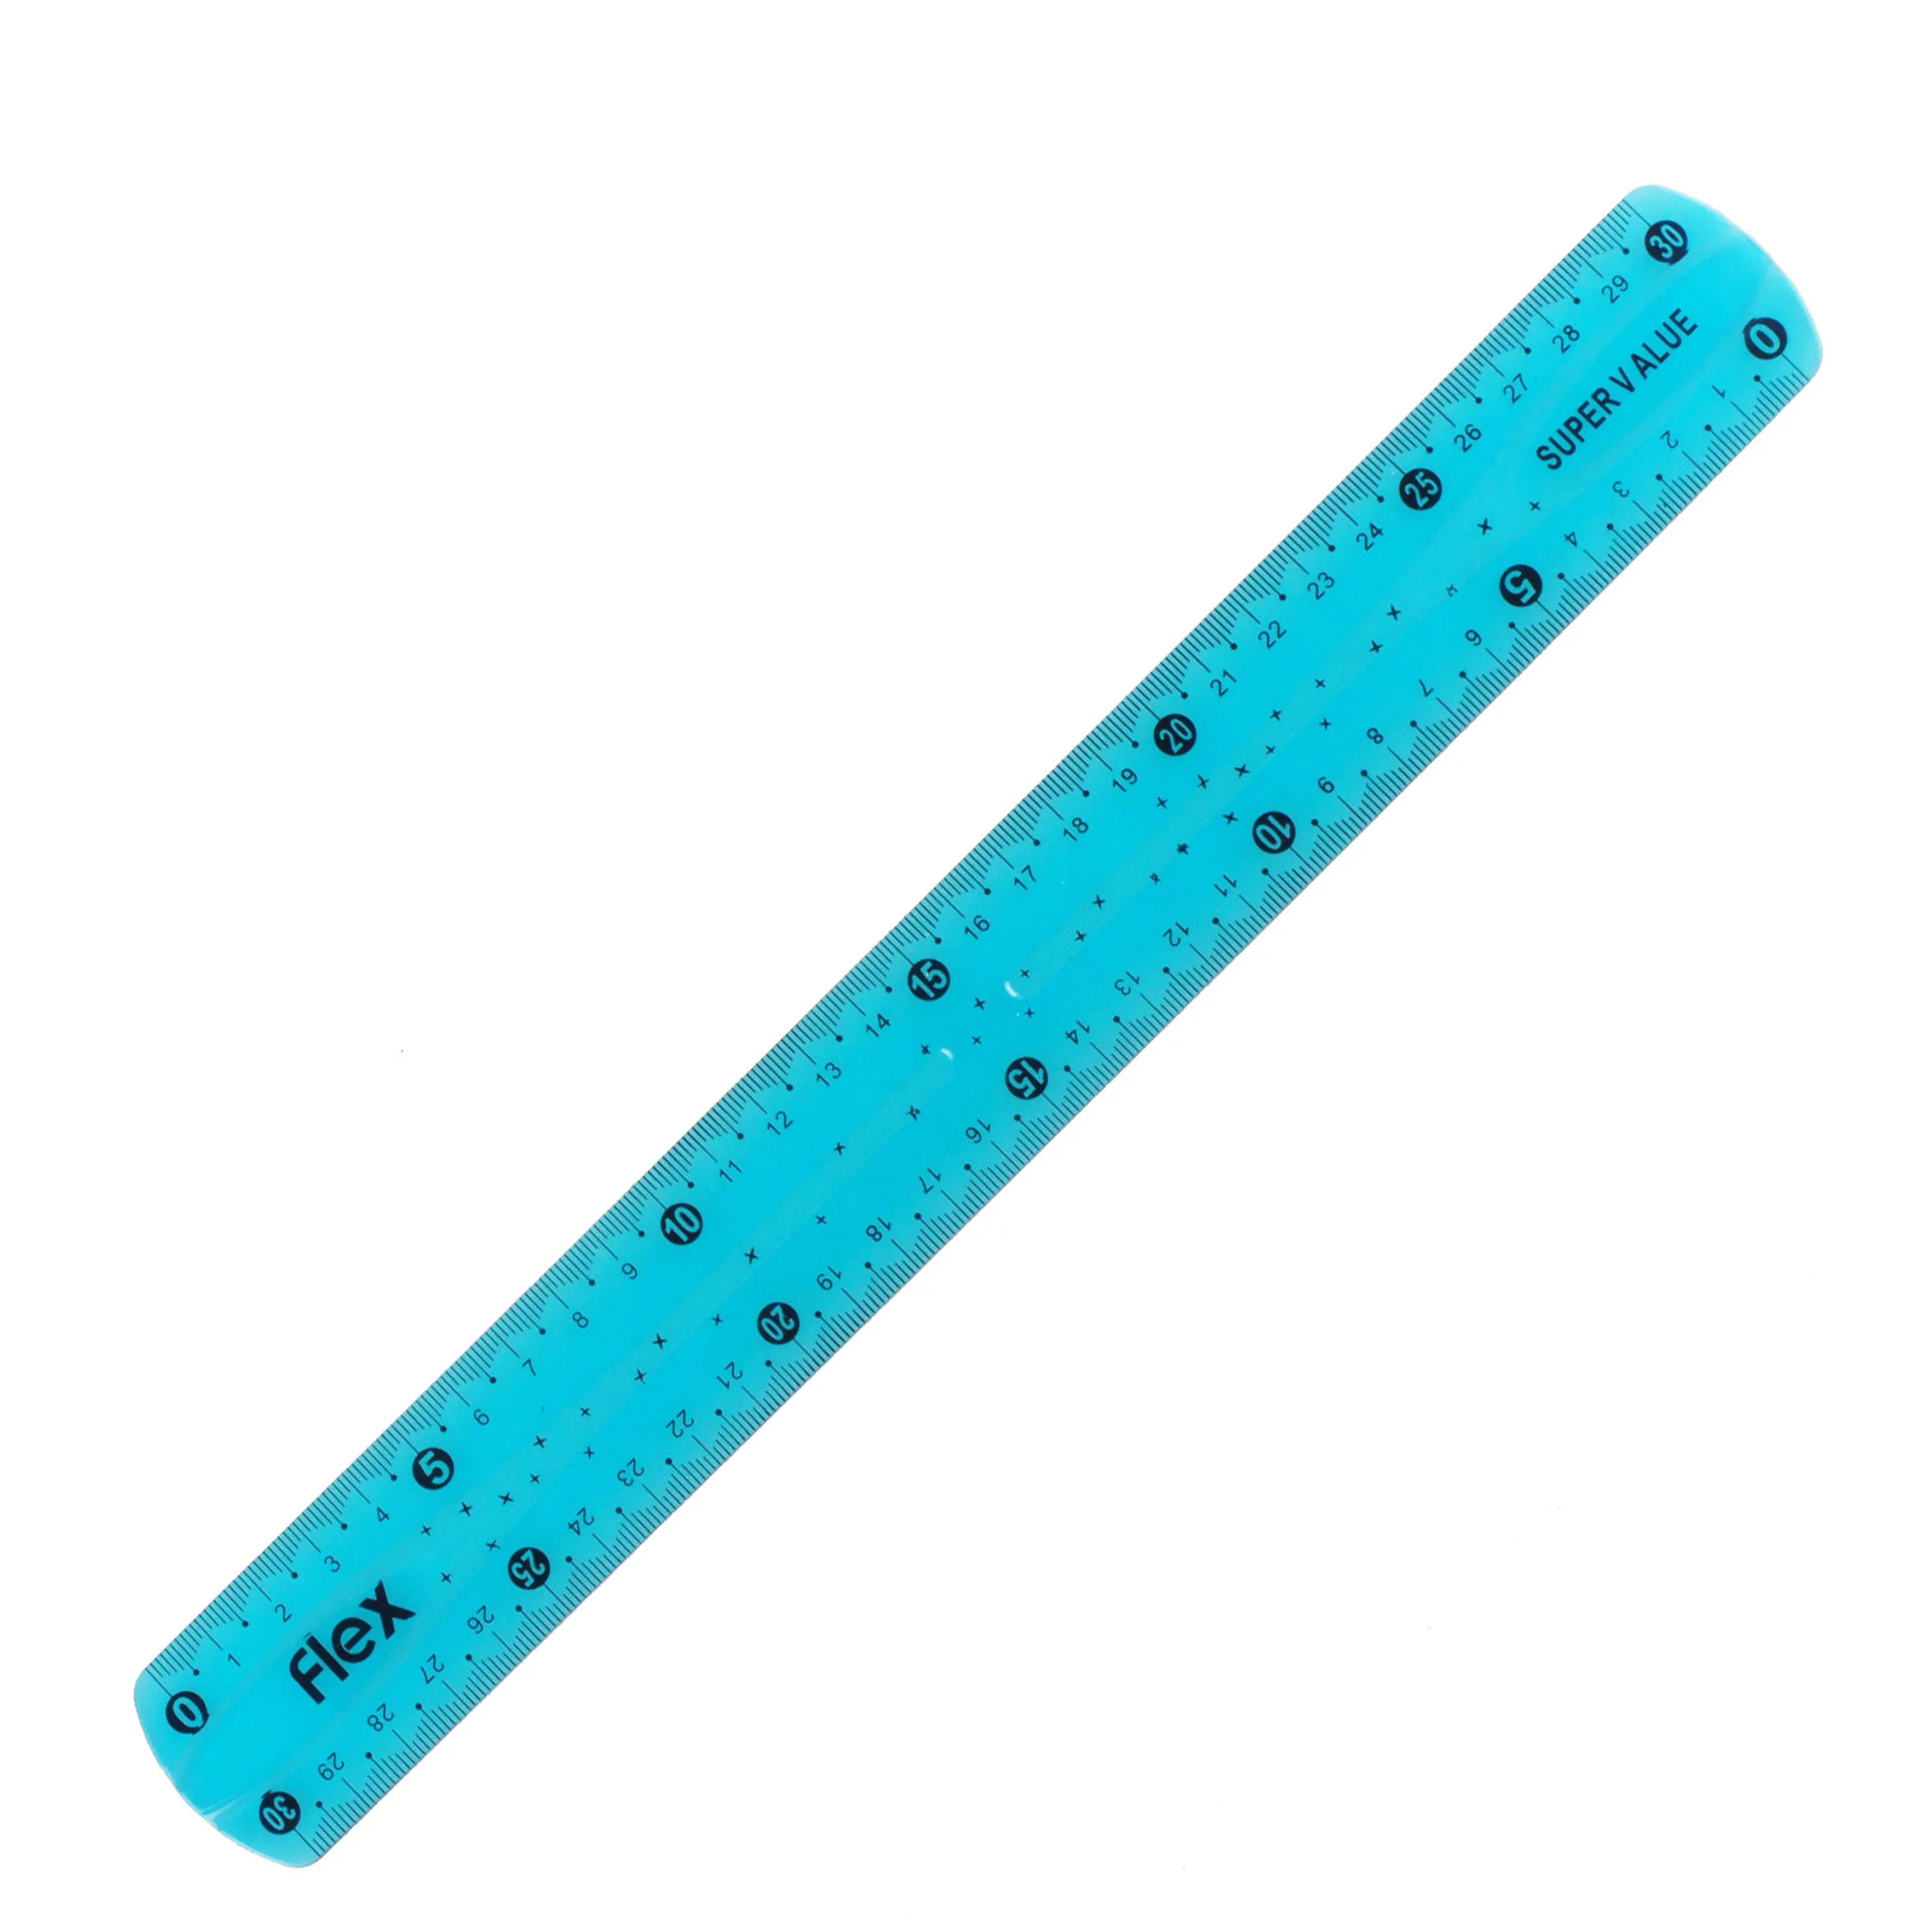 Hot Sale 30CM PVC Flexible Ruler Soft Plastic Ruler for Office and School